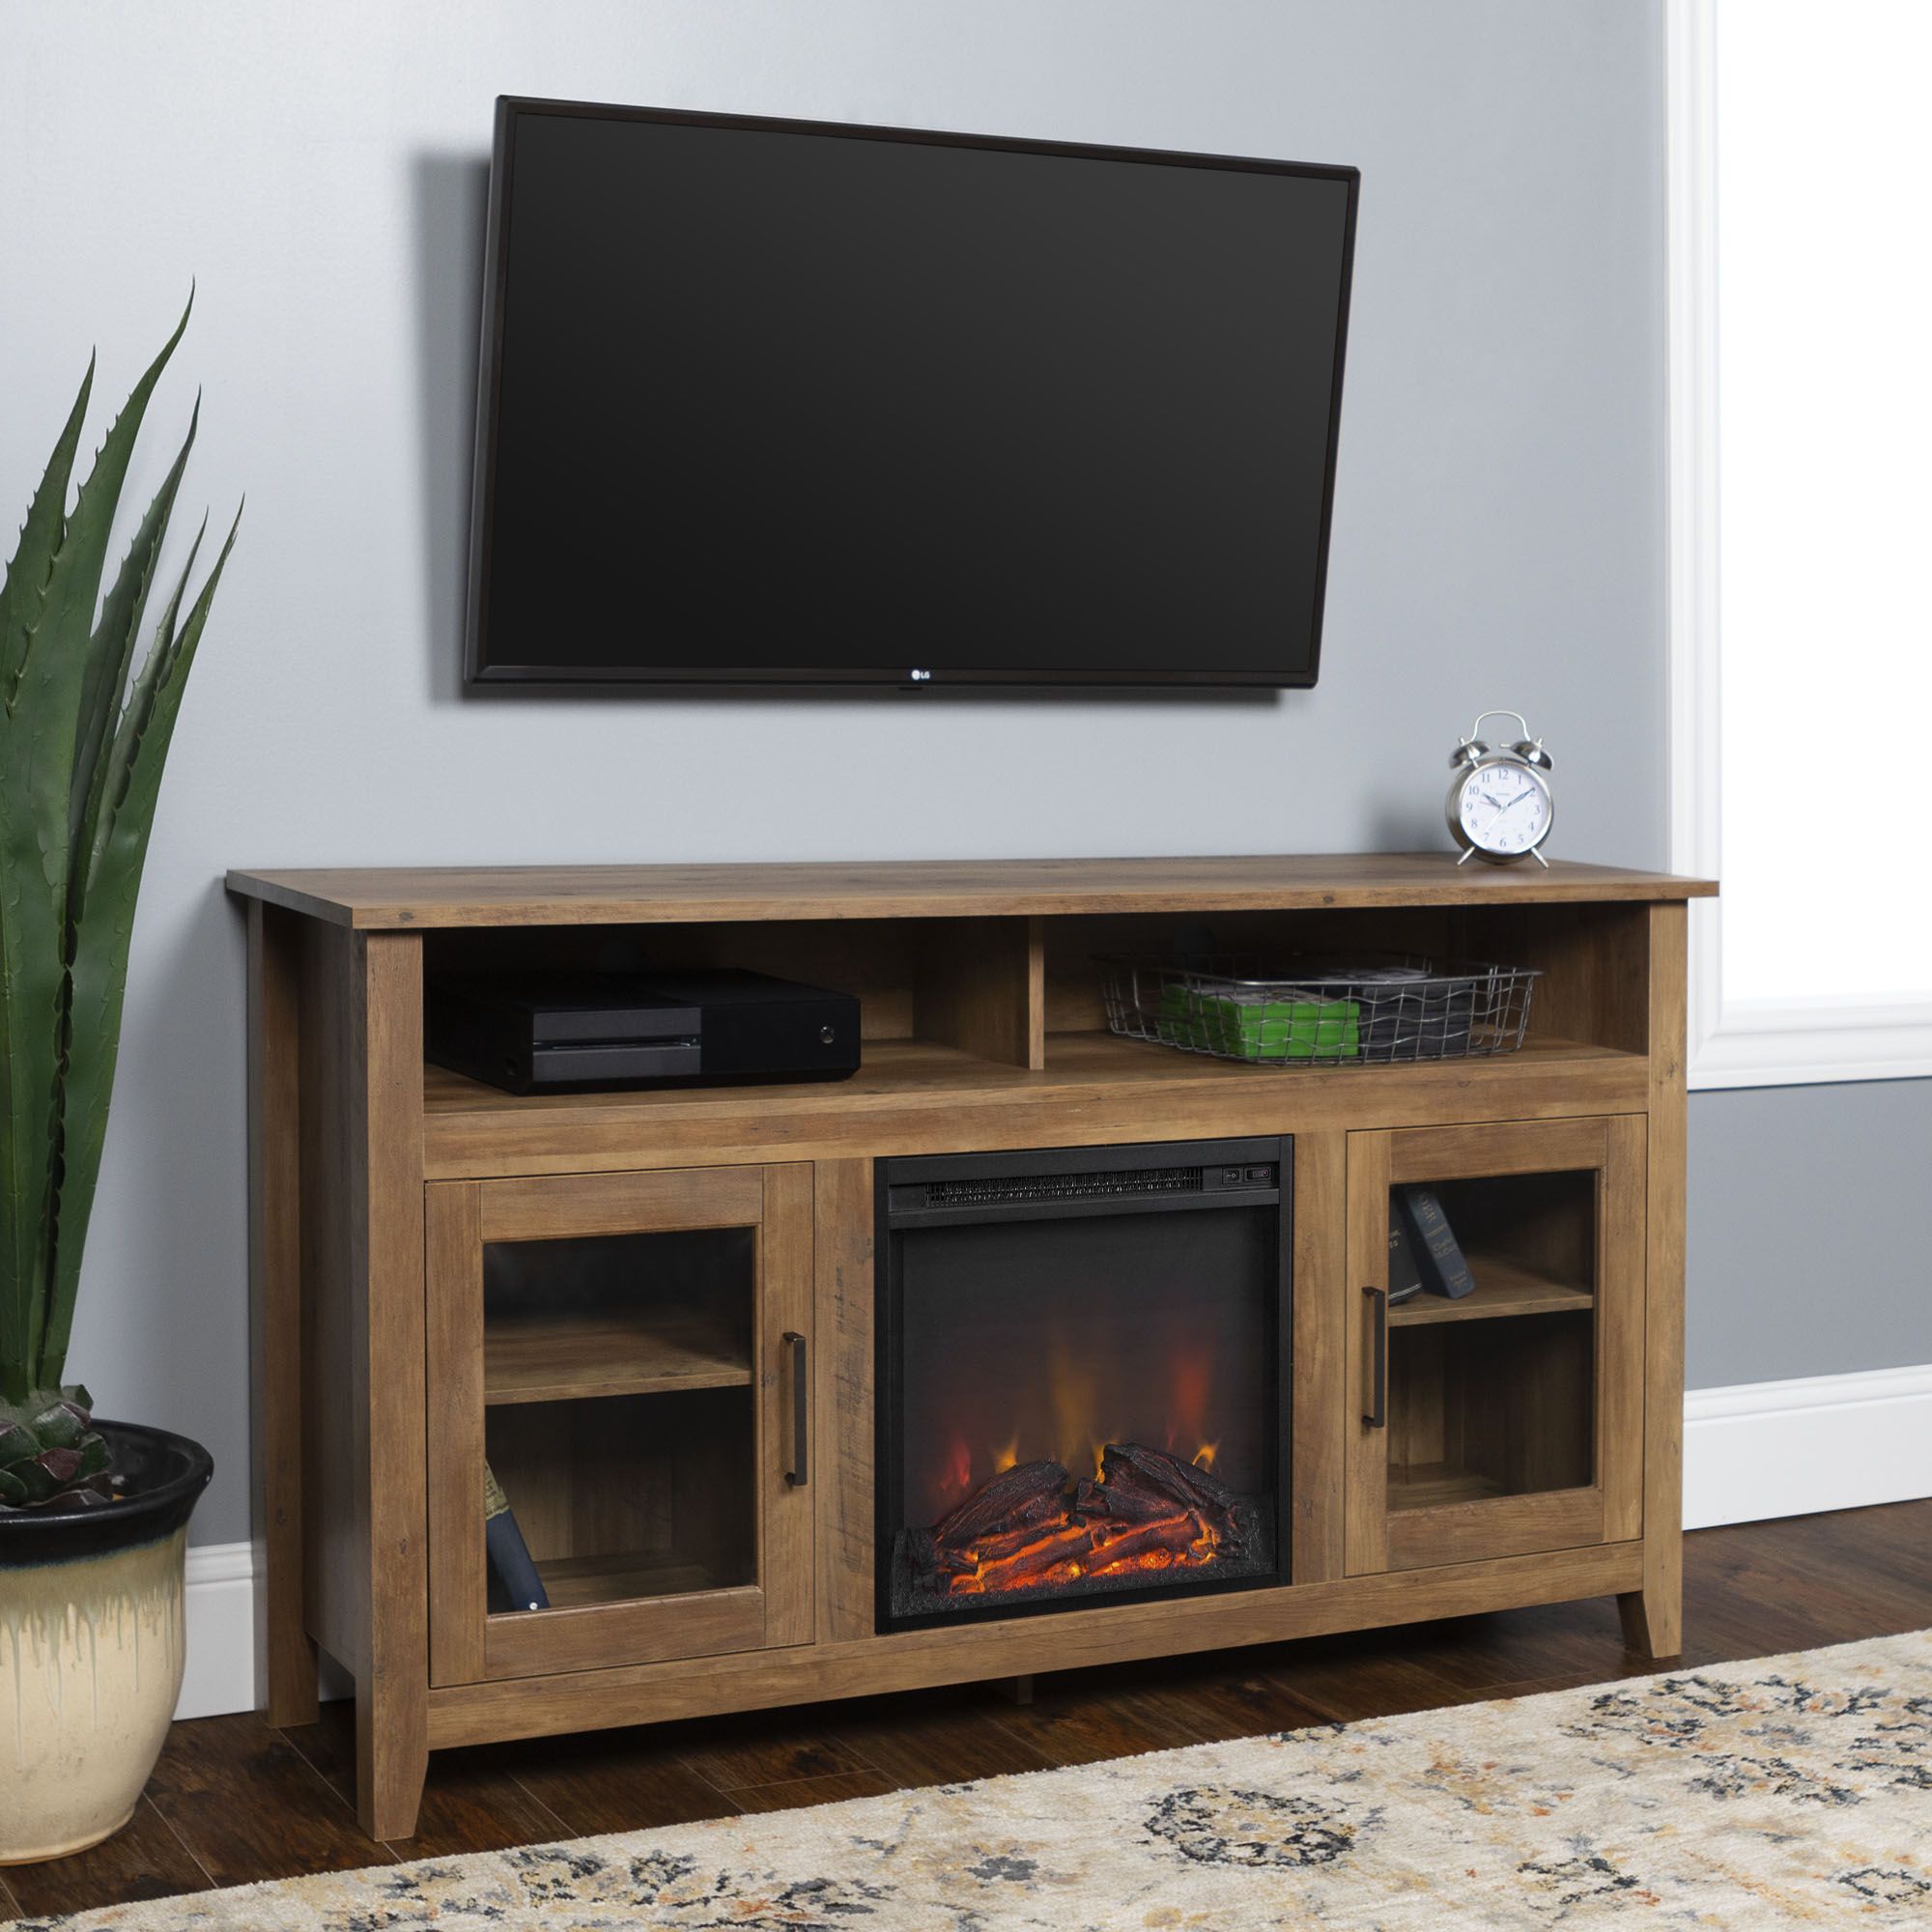 58" Wood Highboy Fireplace Tv Stand – Rustic Oak 842158125507 | Ebay Inside Wood Highboy Fireplace Tv Stands (View 10 of 20)